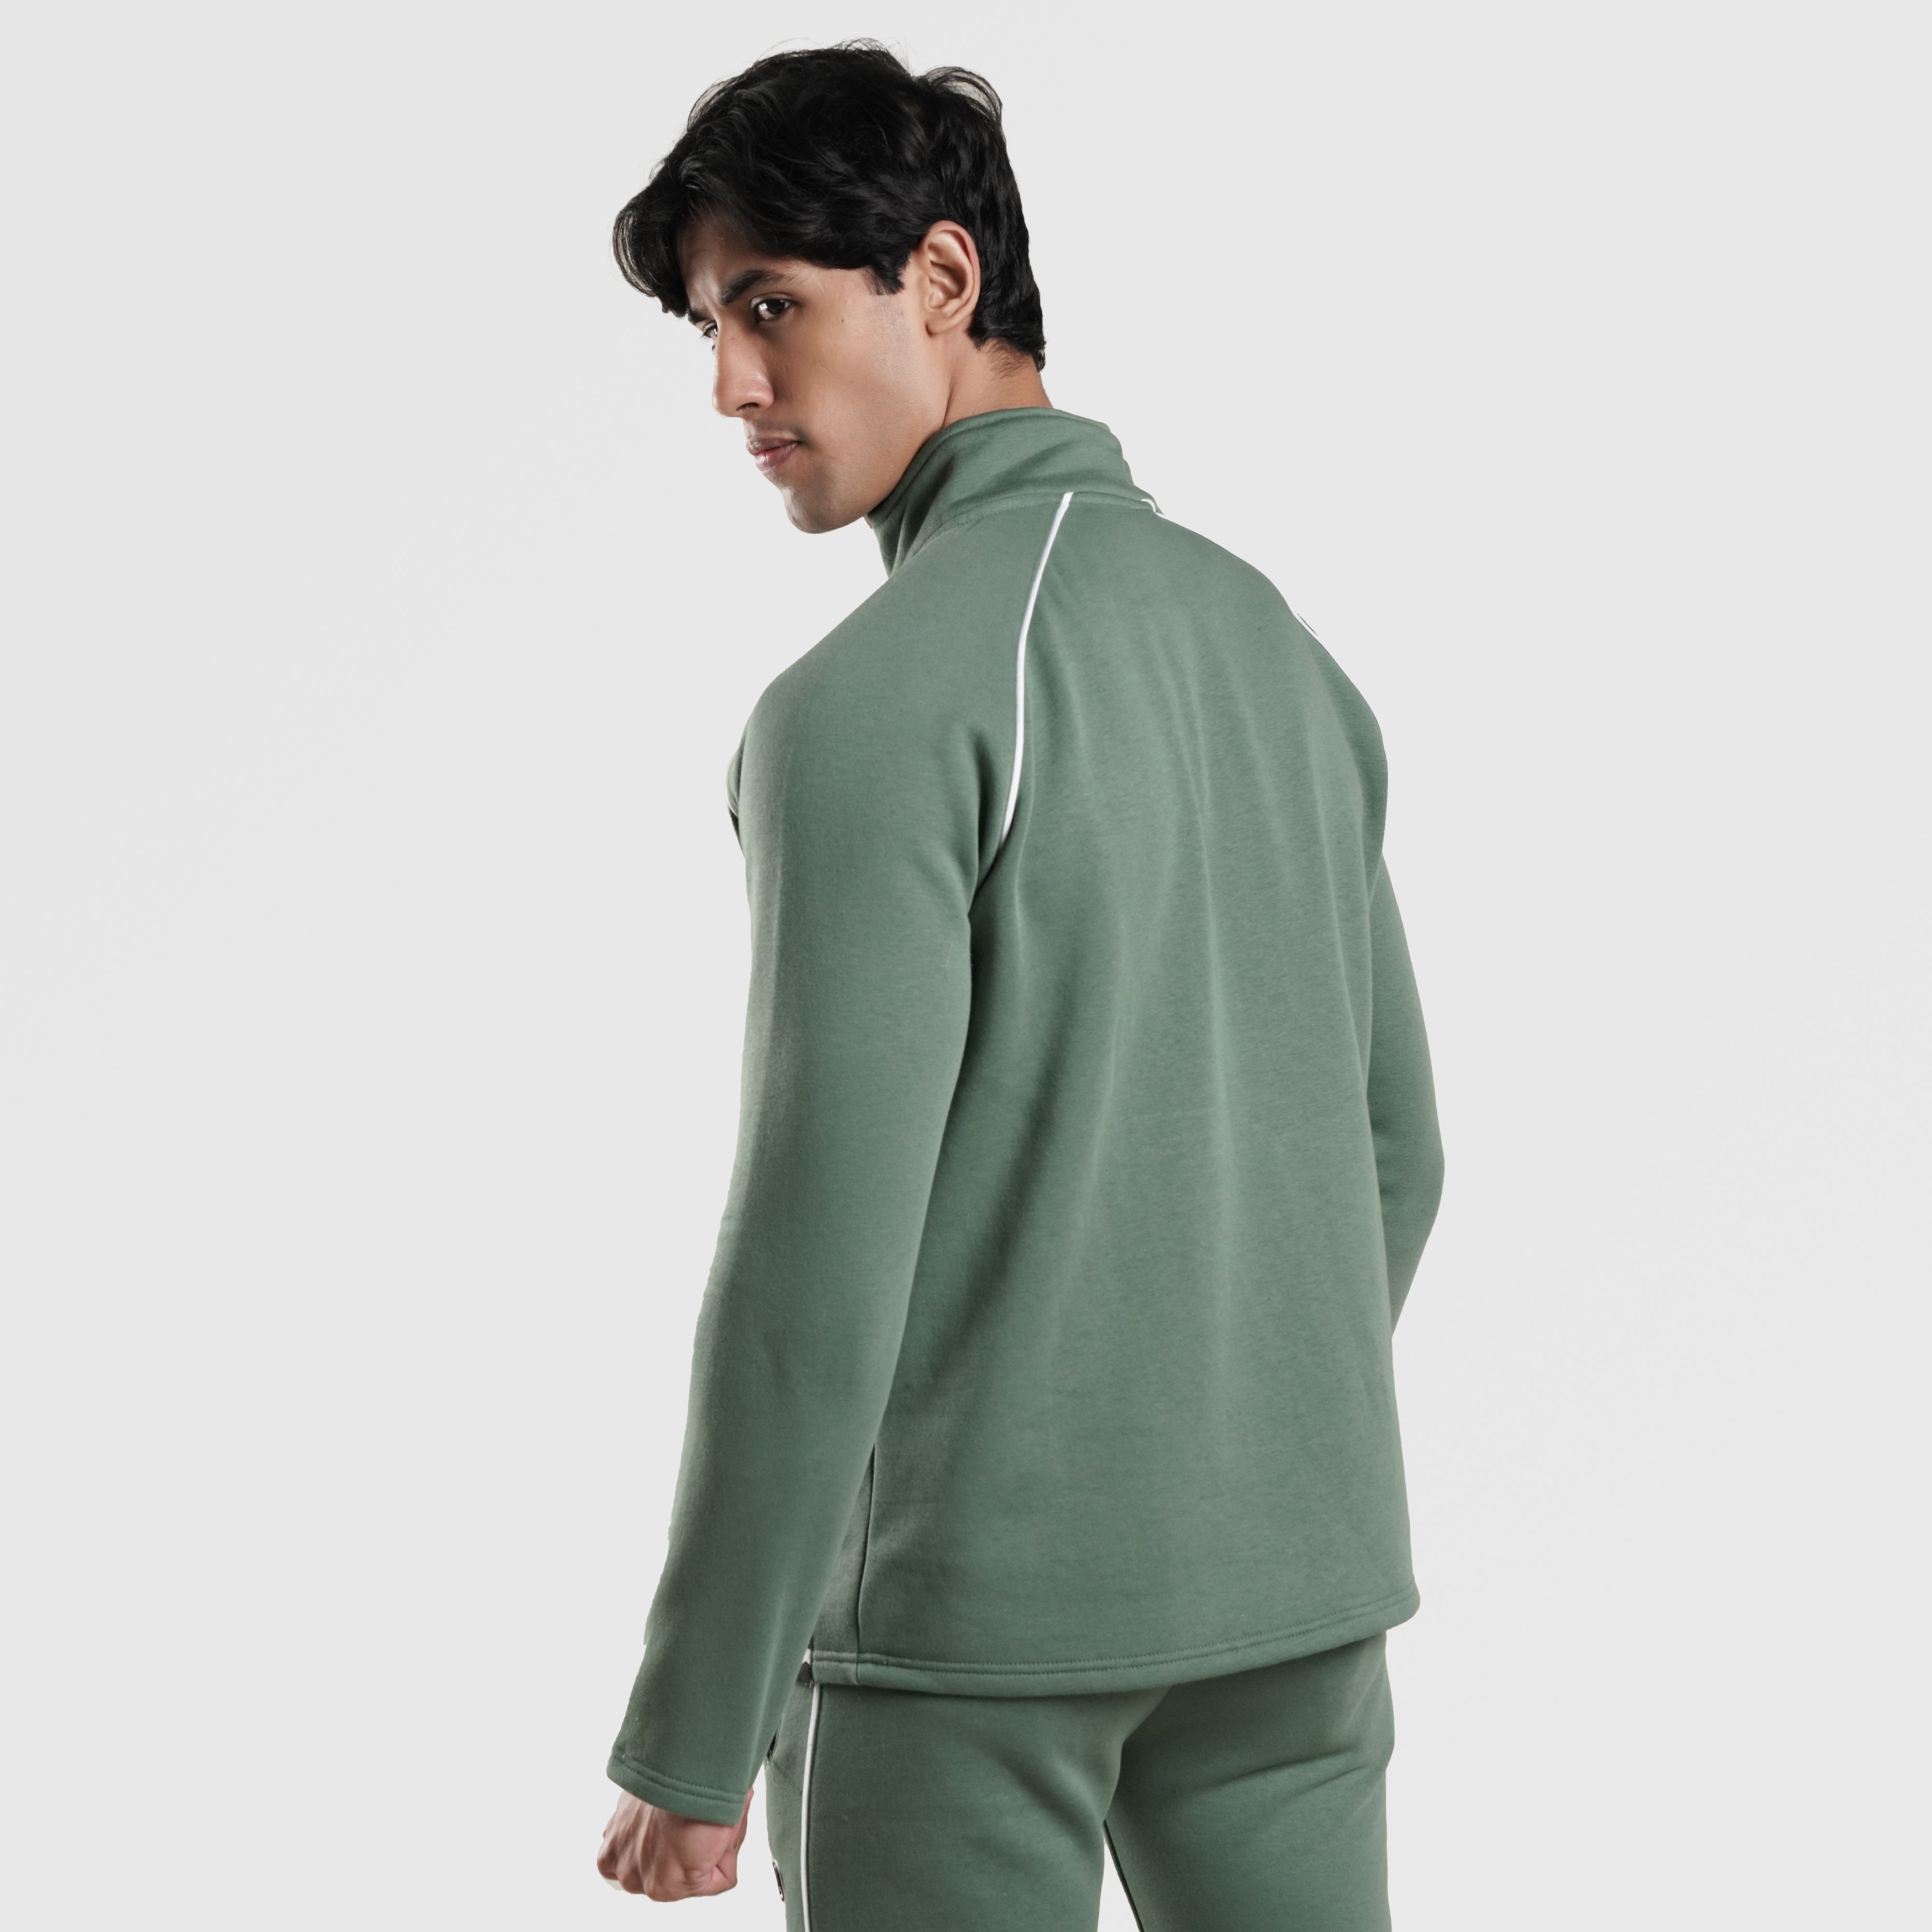 Range Sweatshirt (Green)